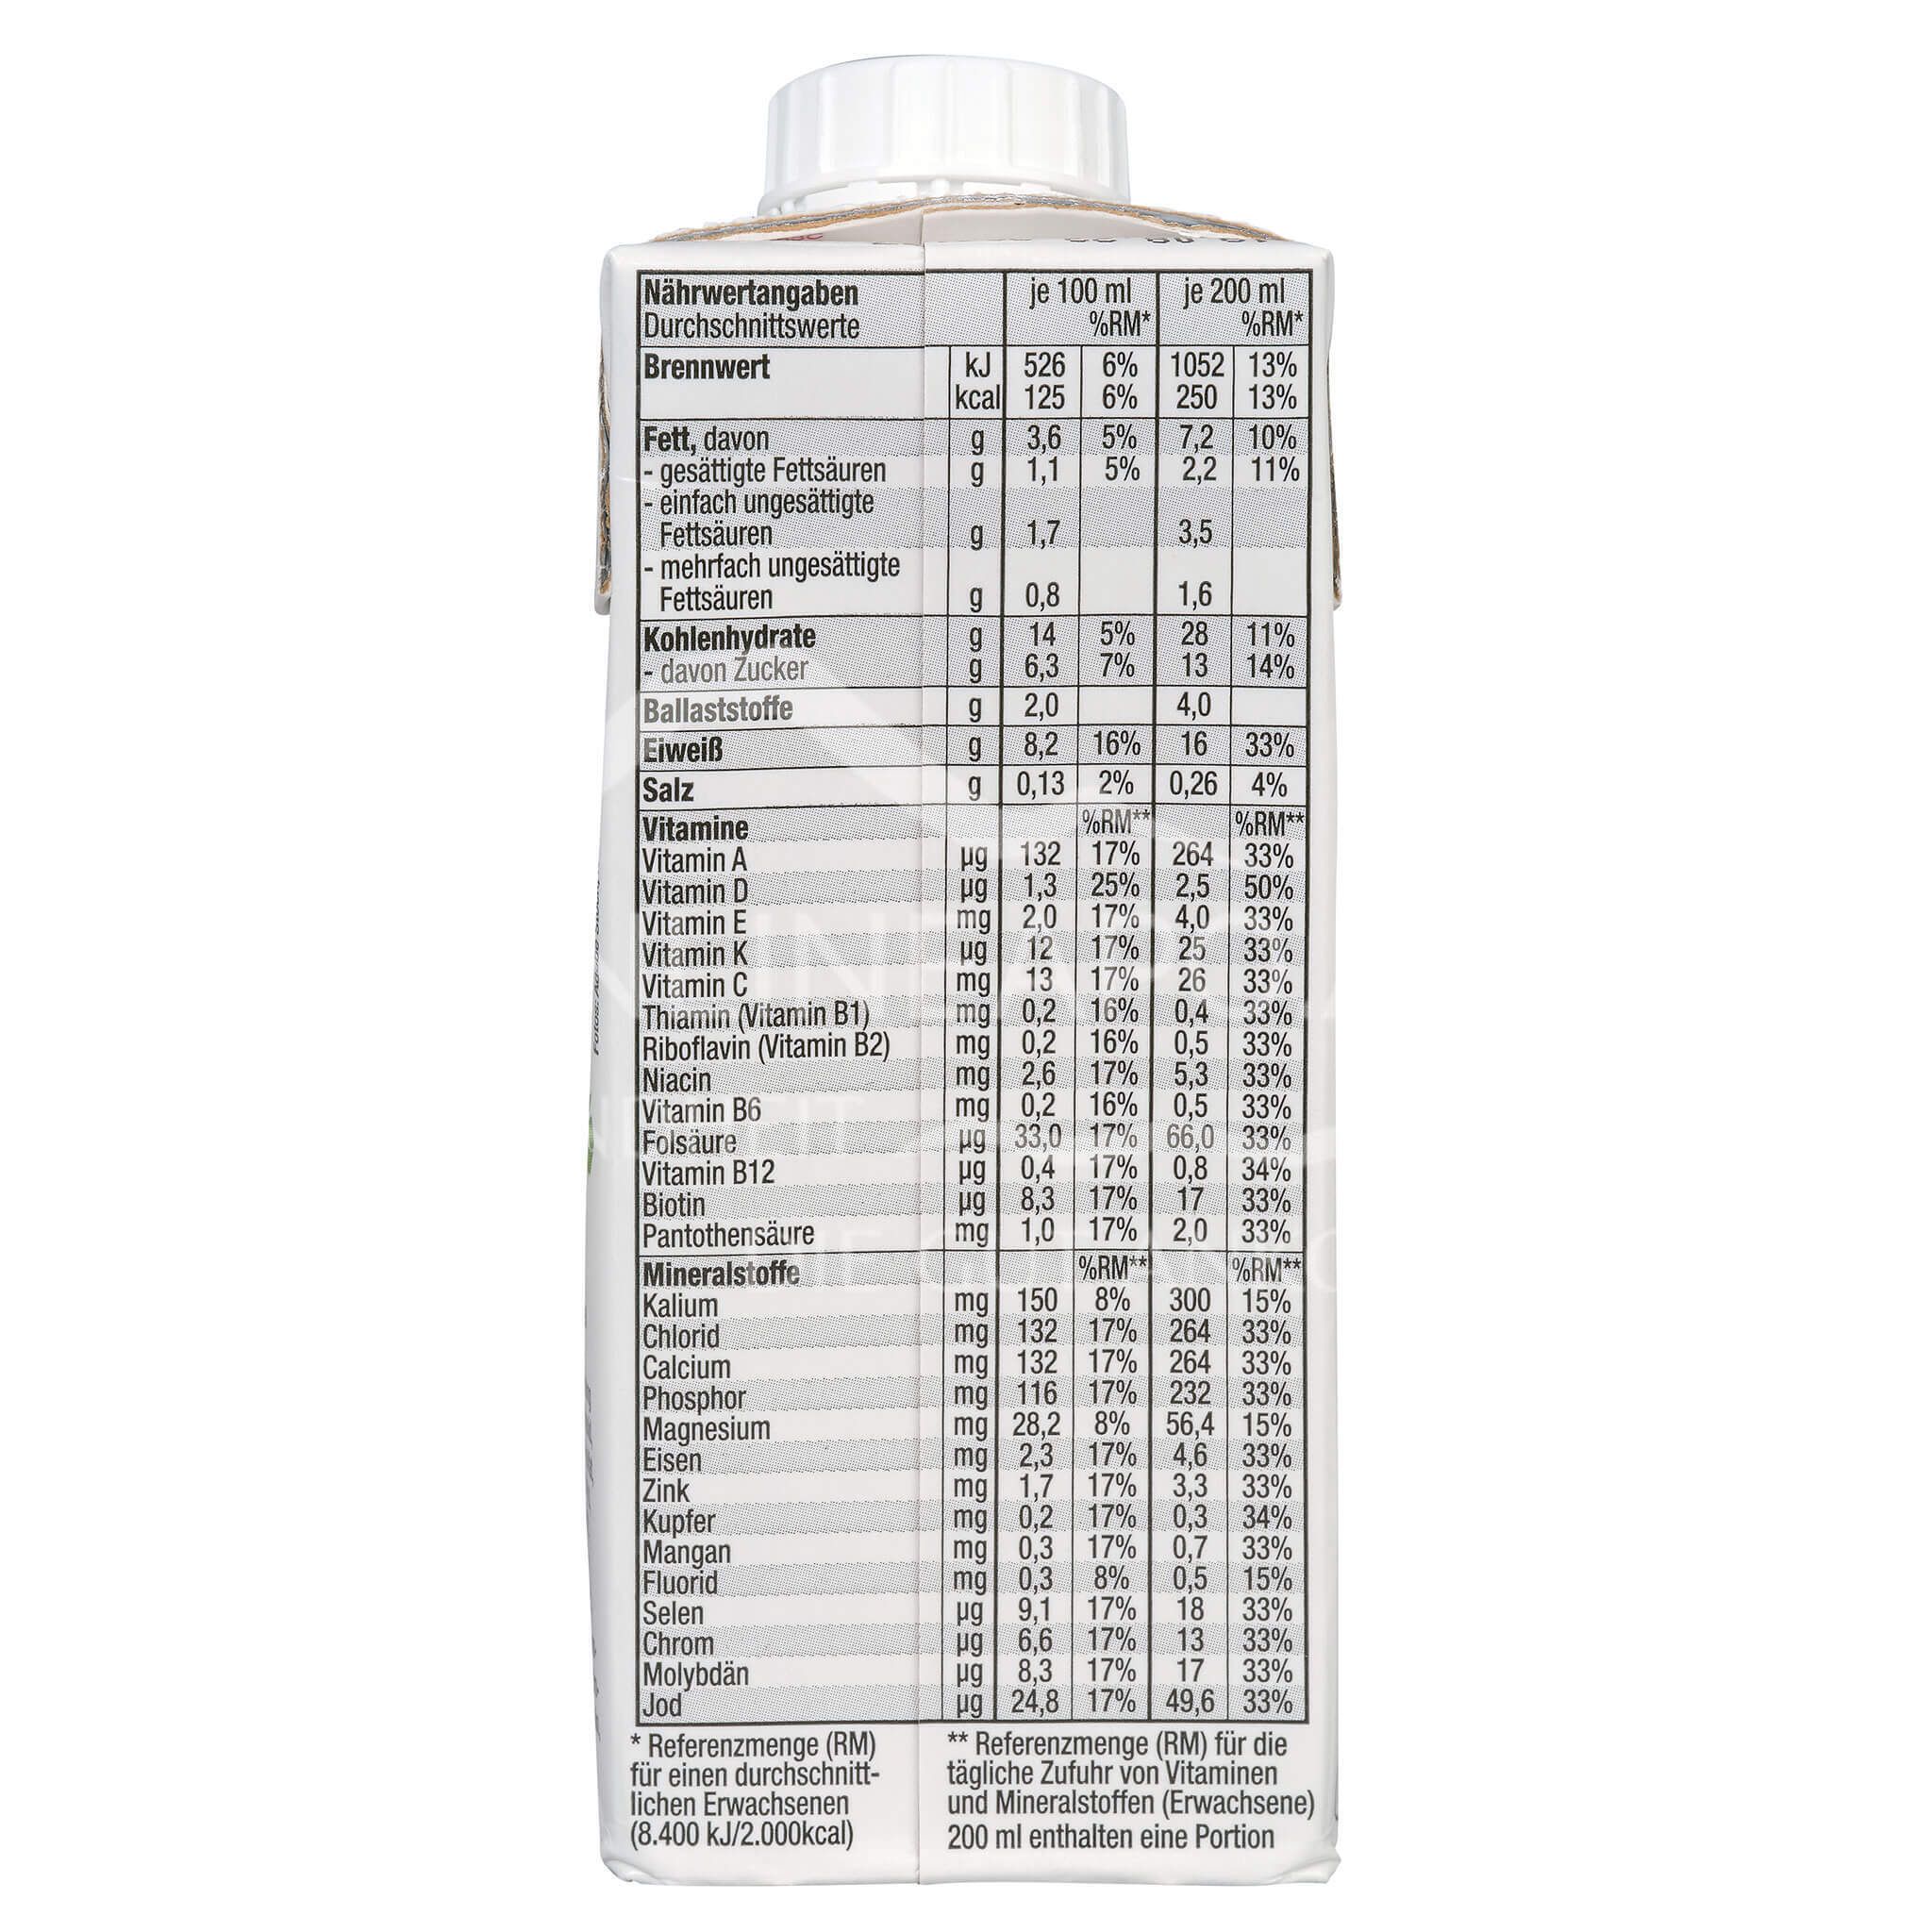 all in® COMPLETE Protein Mahlzeit Vanille (14 x 200 ml)